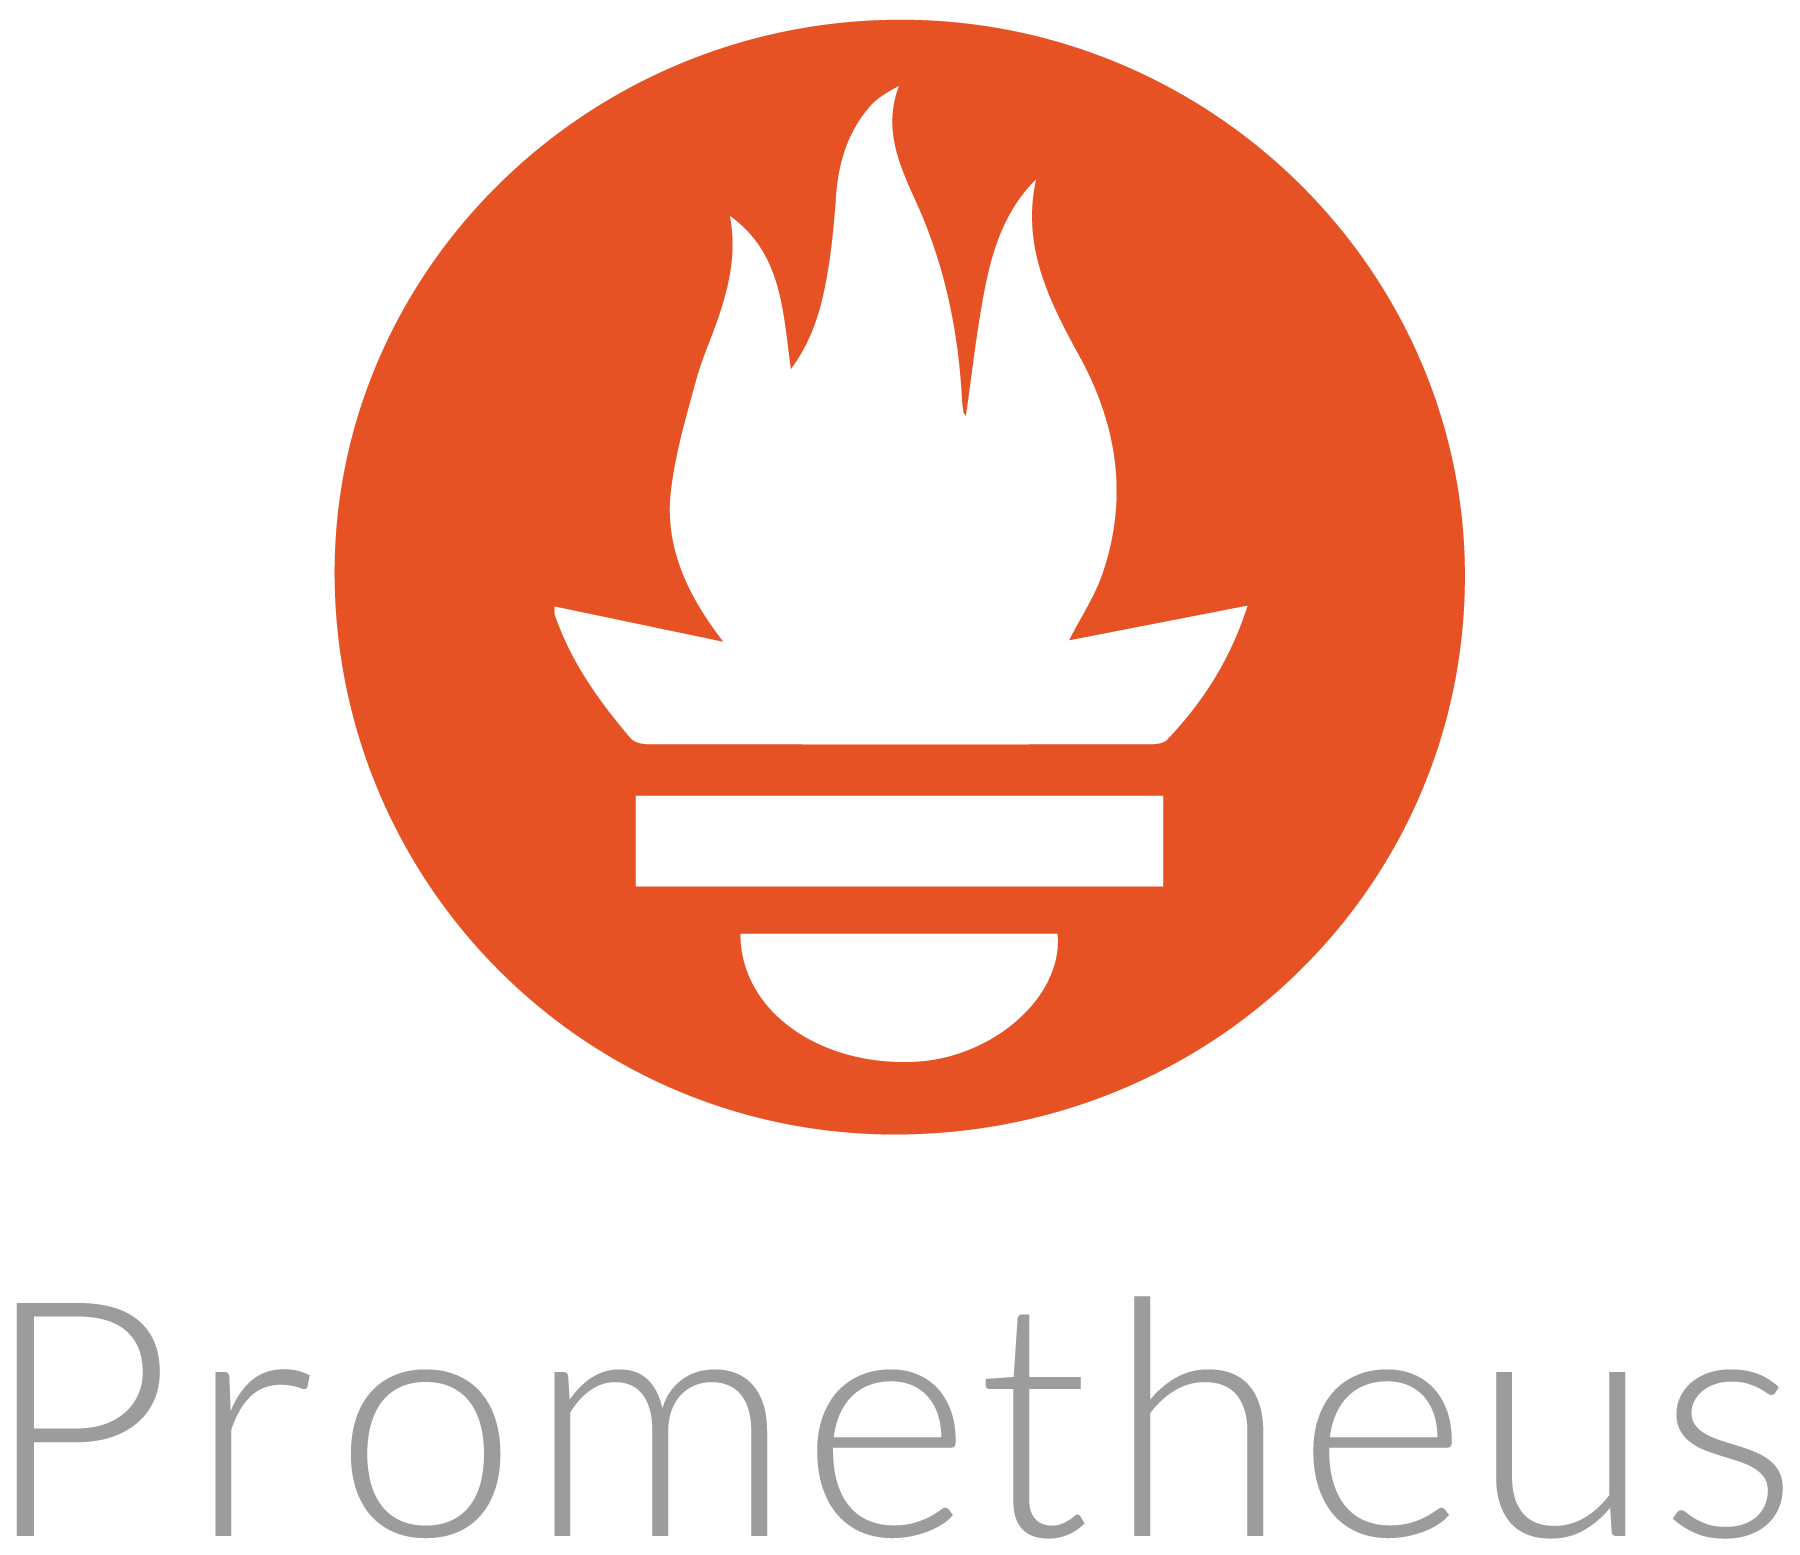 prometheus logo